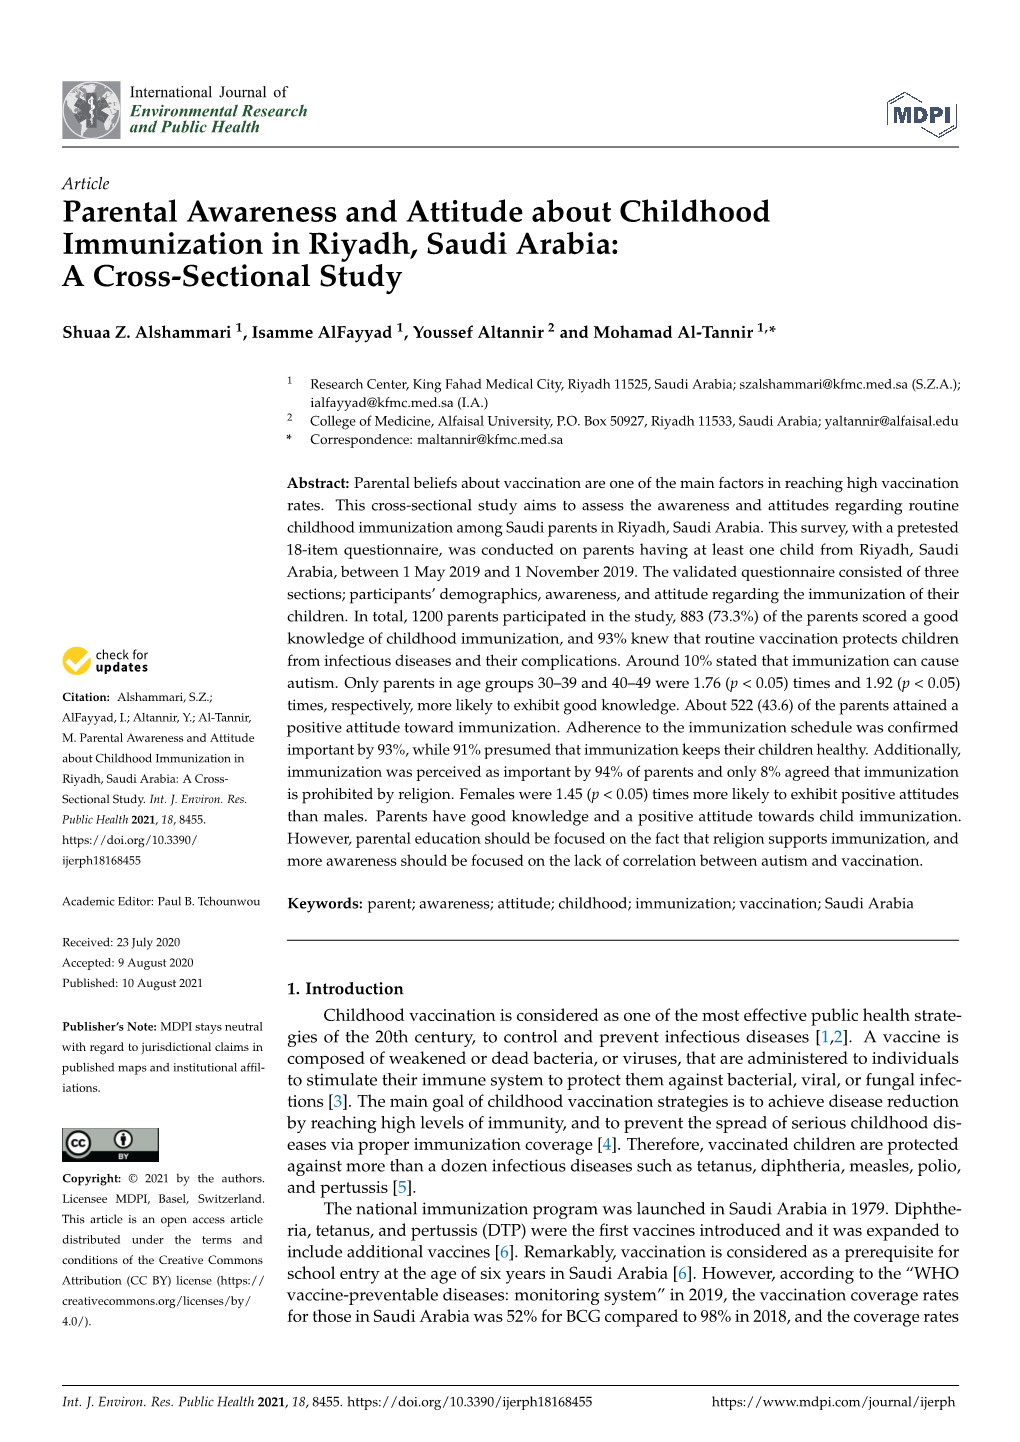 Parental Awareness and Attitude About Childhood Immunization in Riyadh, Saudi Arabia: a Cross-Sectional Study